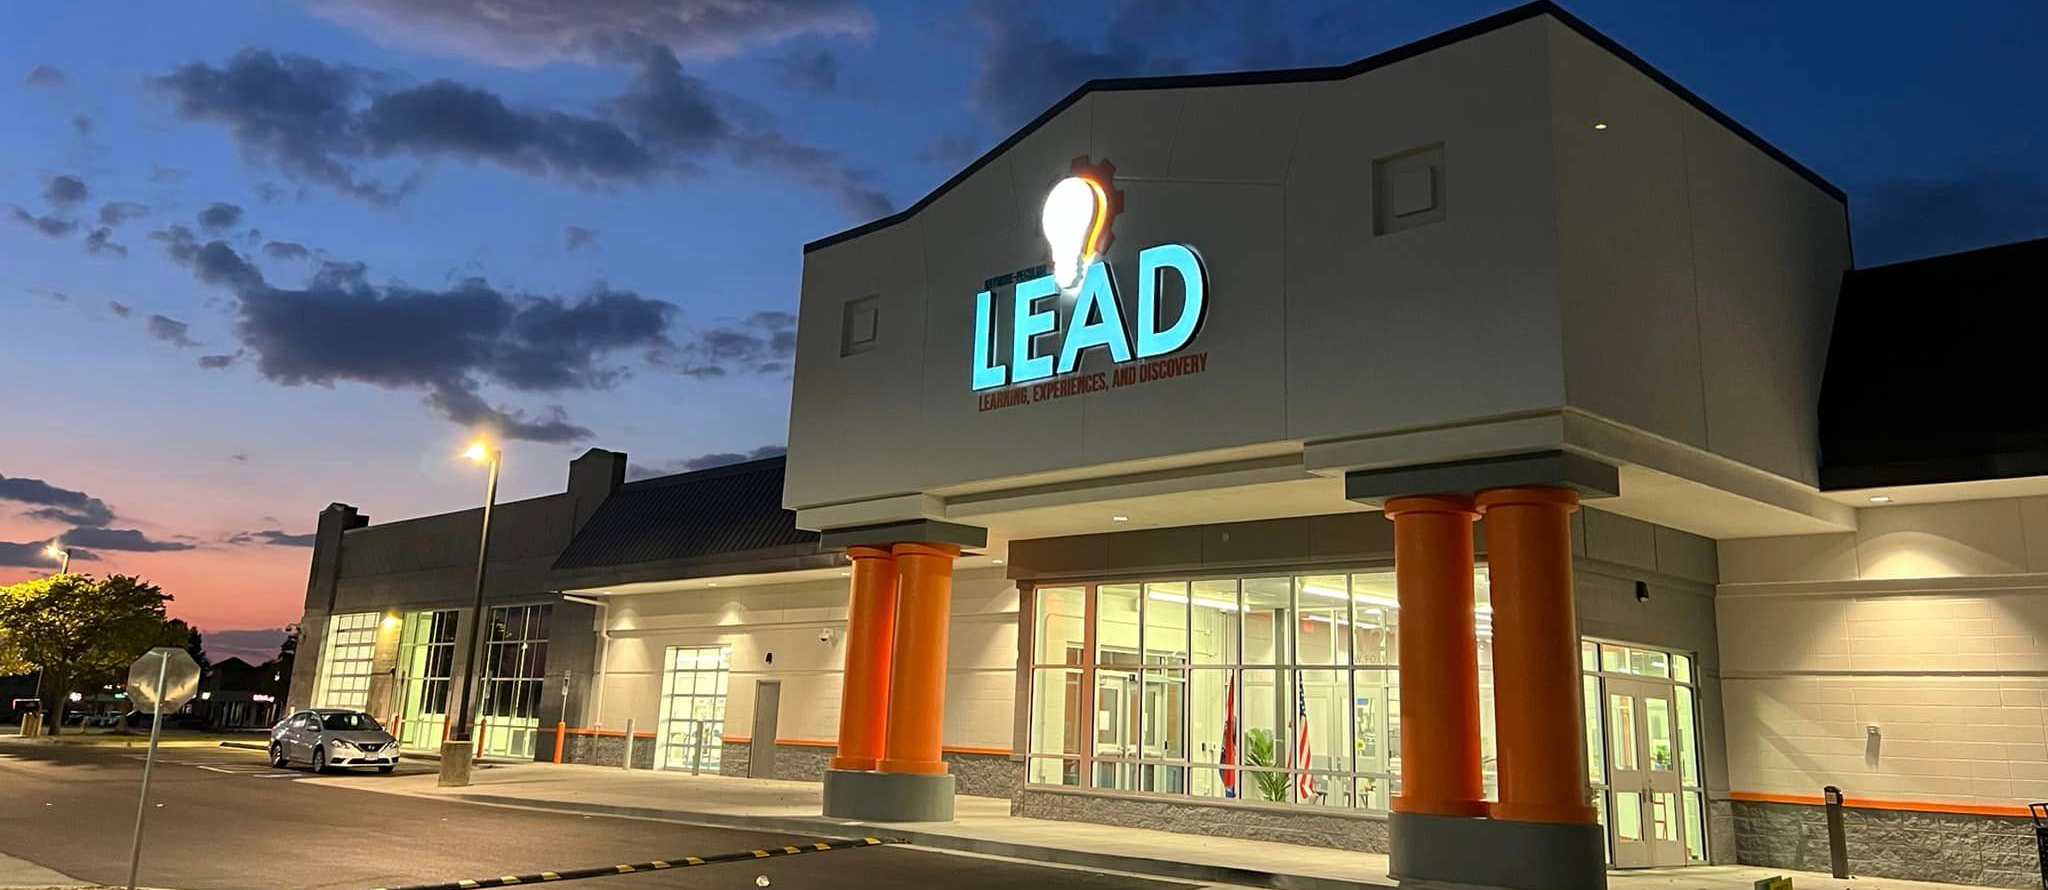 LEAD Center exterior at night